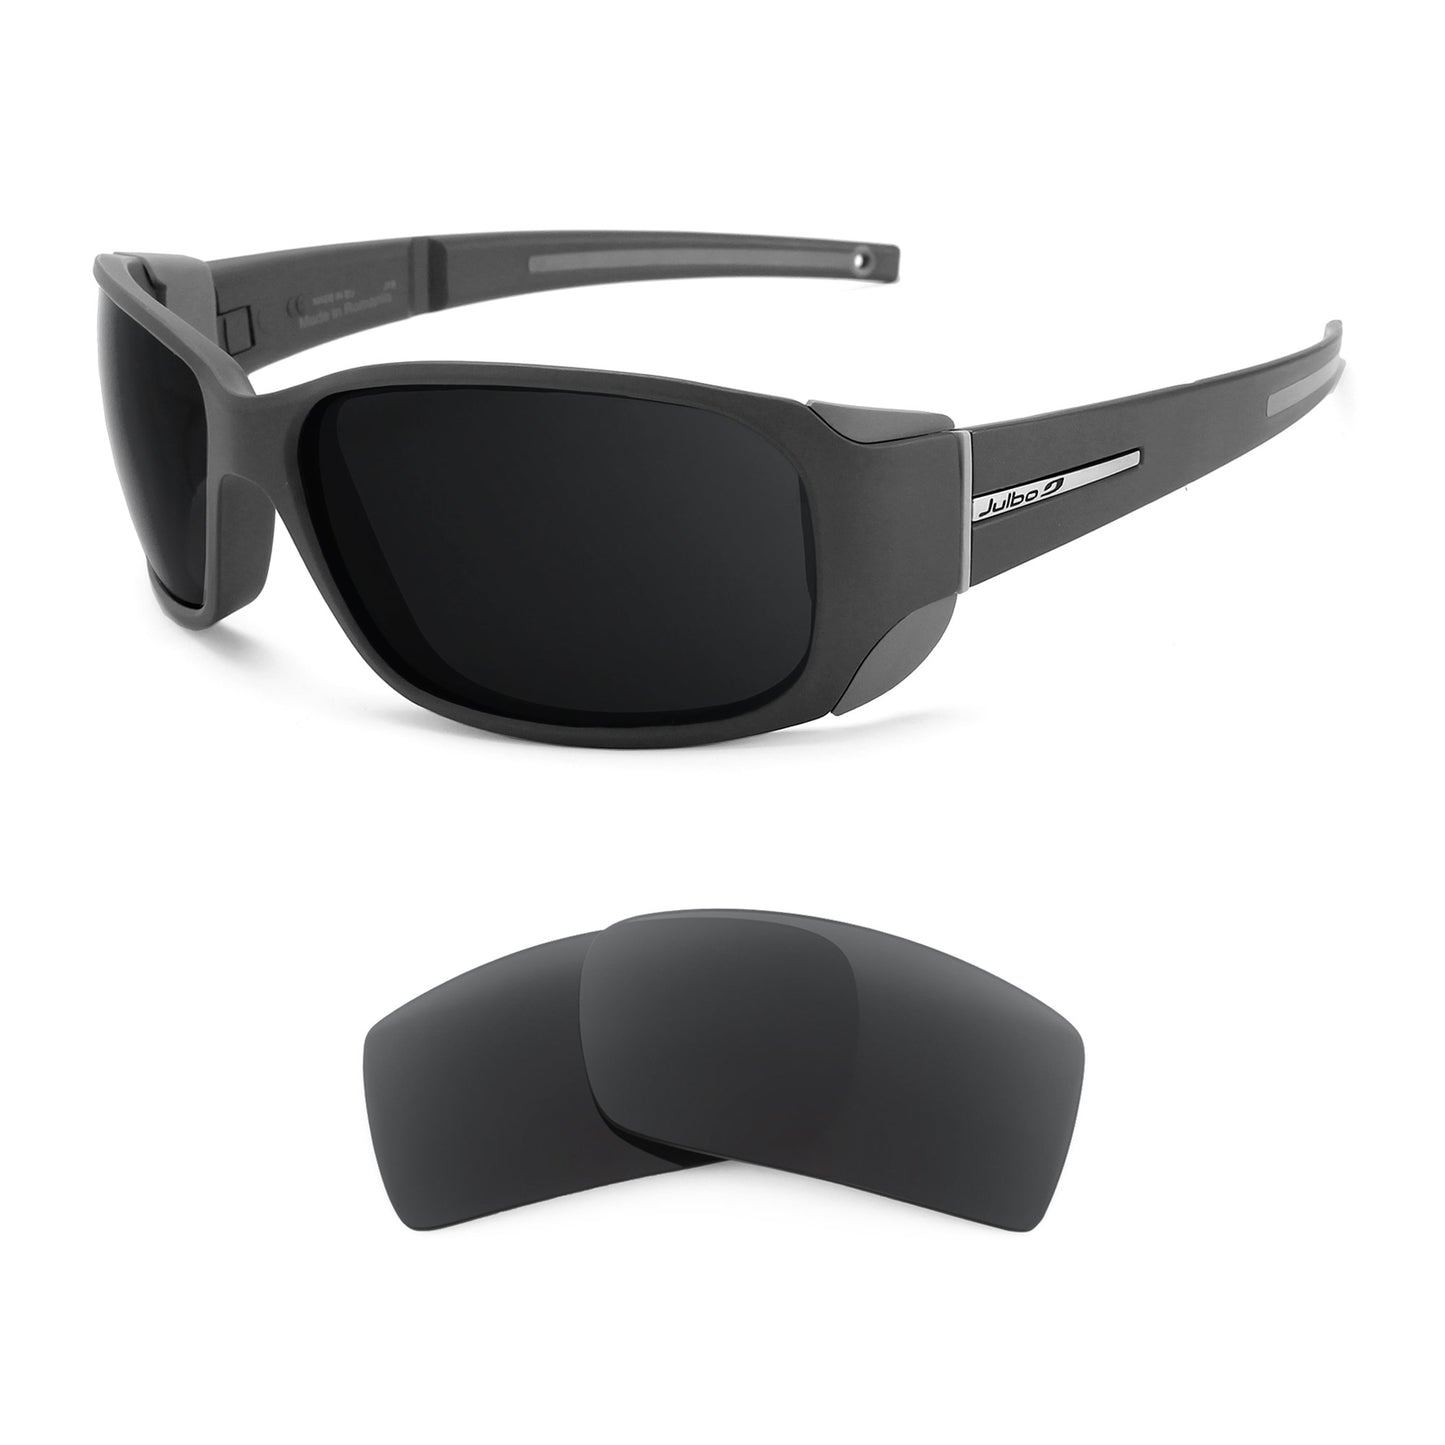 Julbo MonteBianco sunglasses with replacement lenses